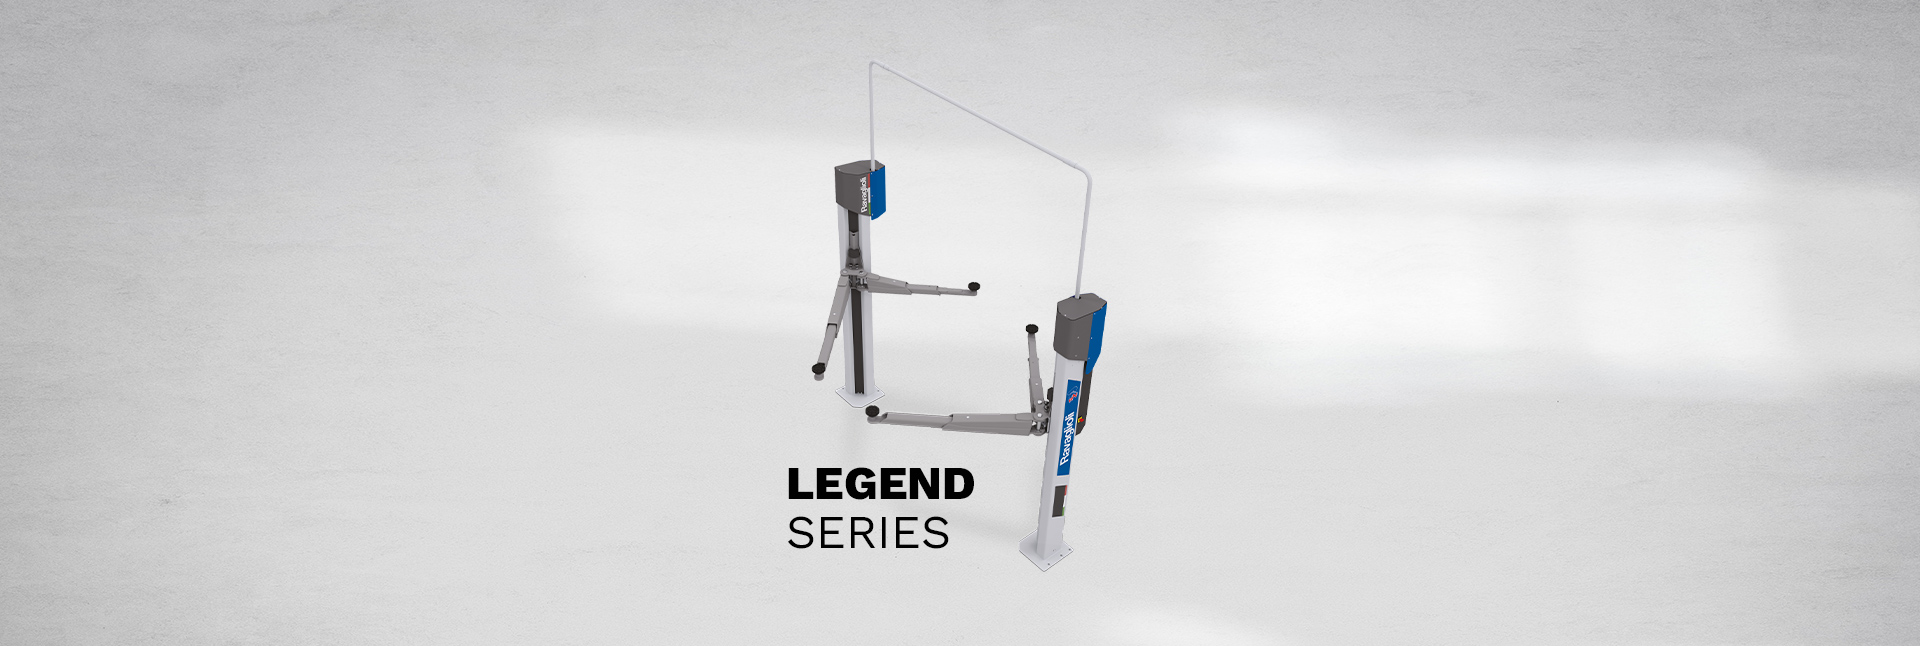 2-post lifts – Legend Series